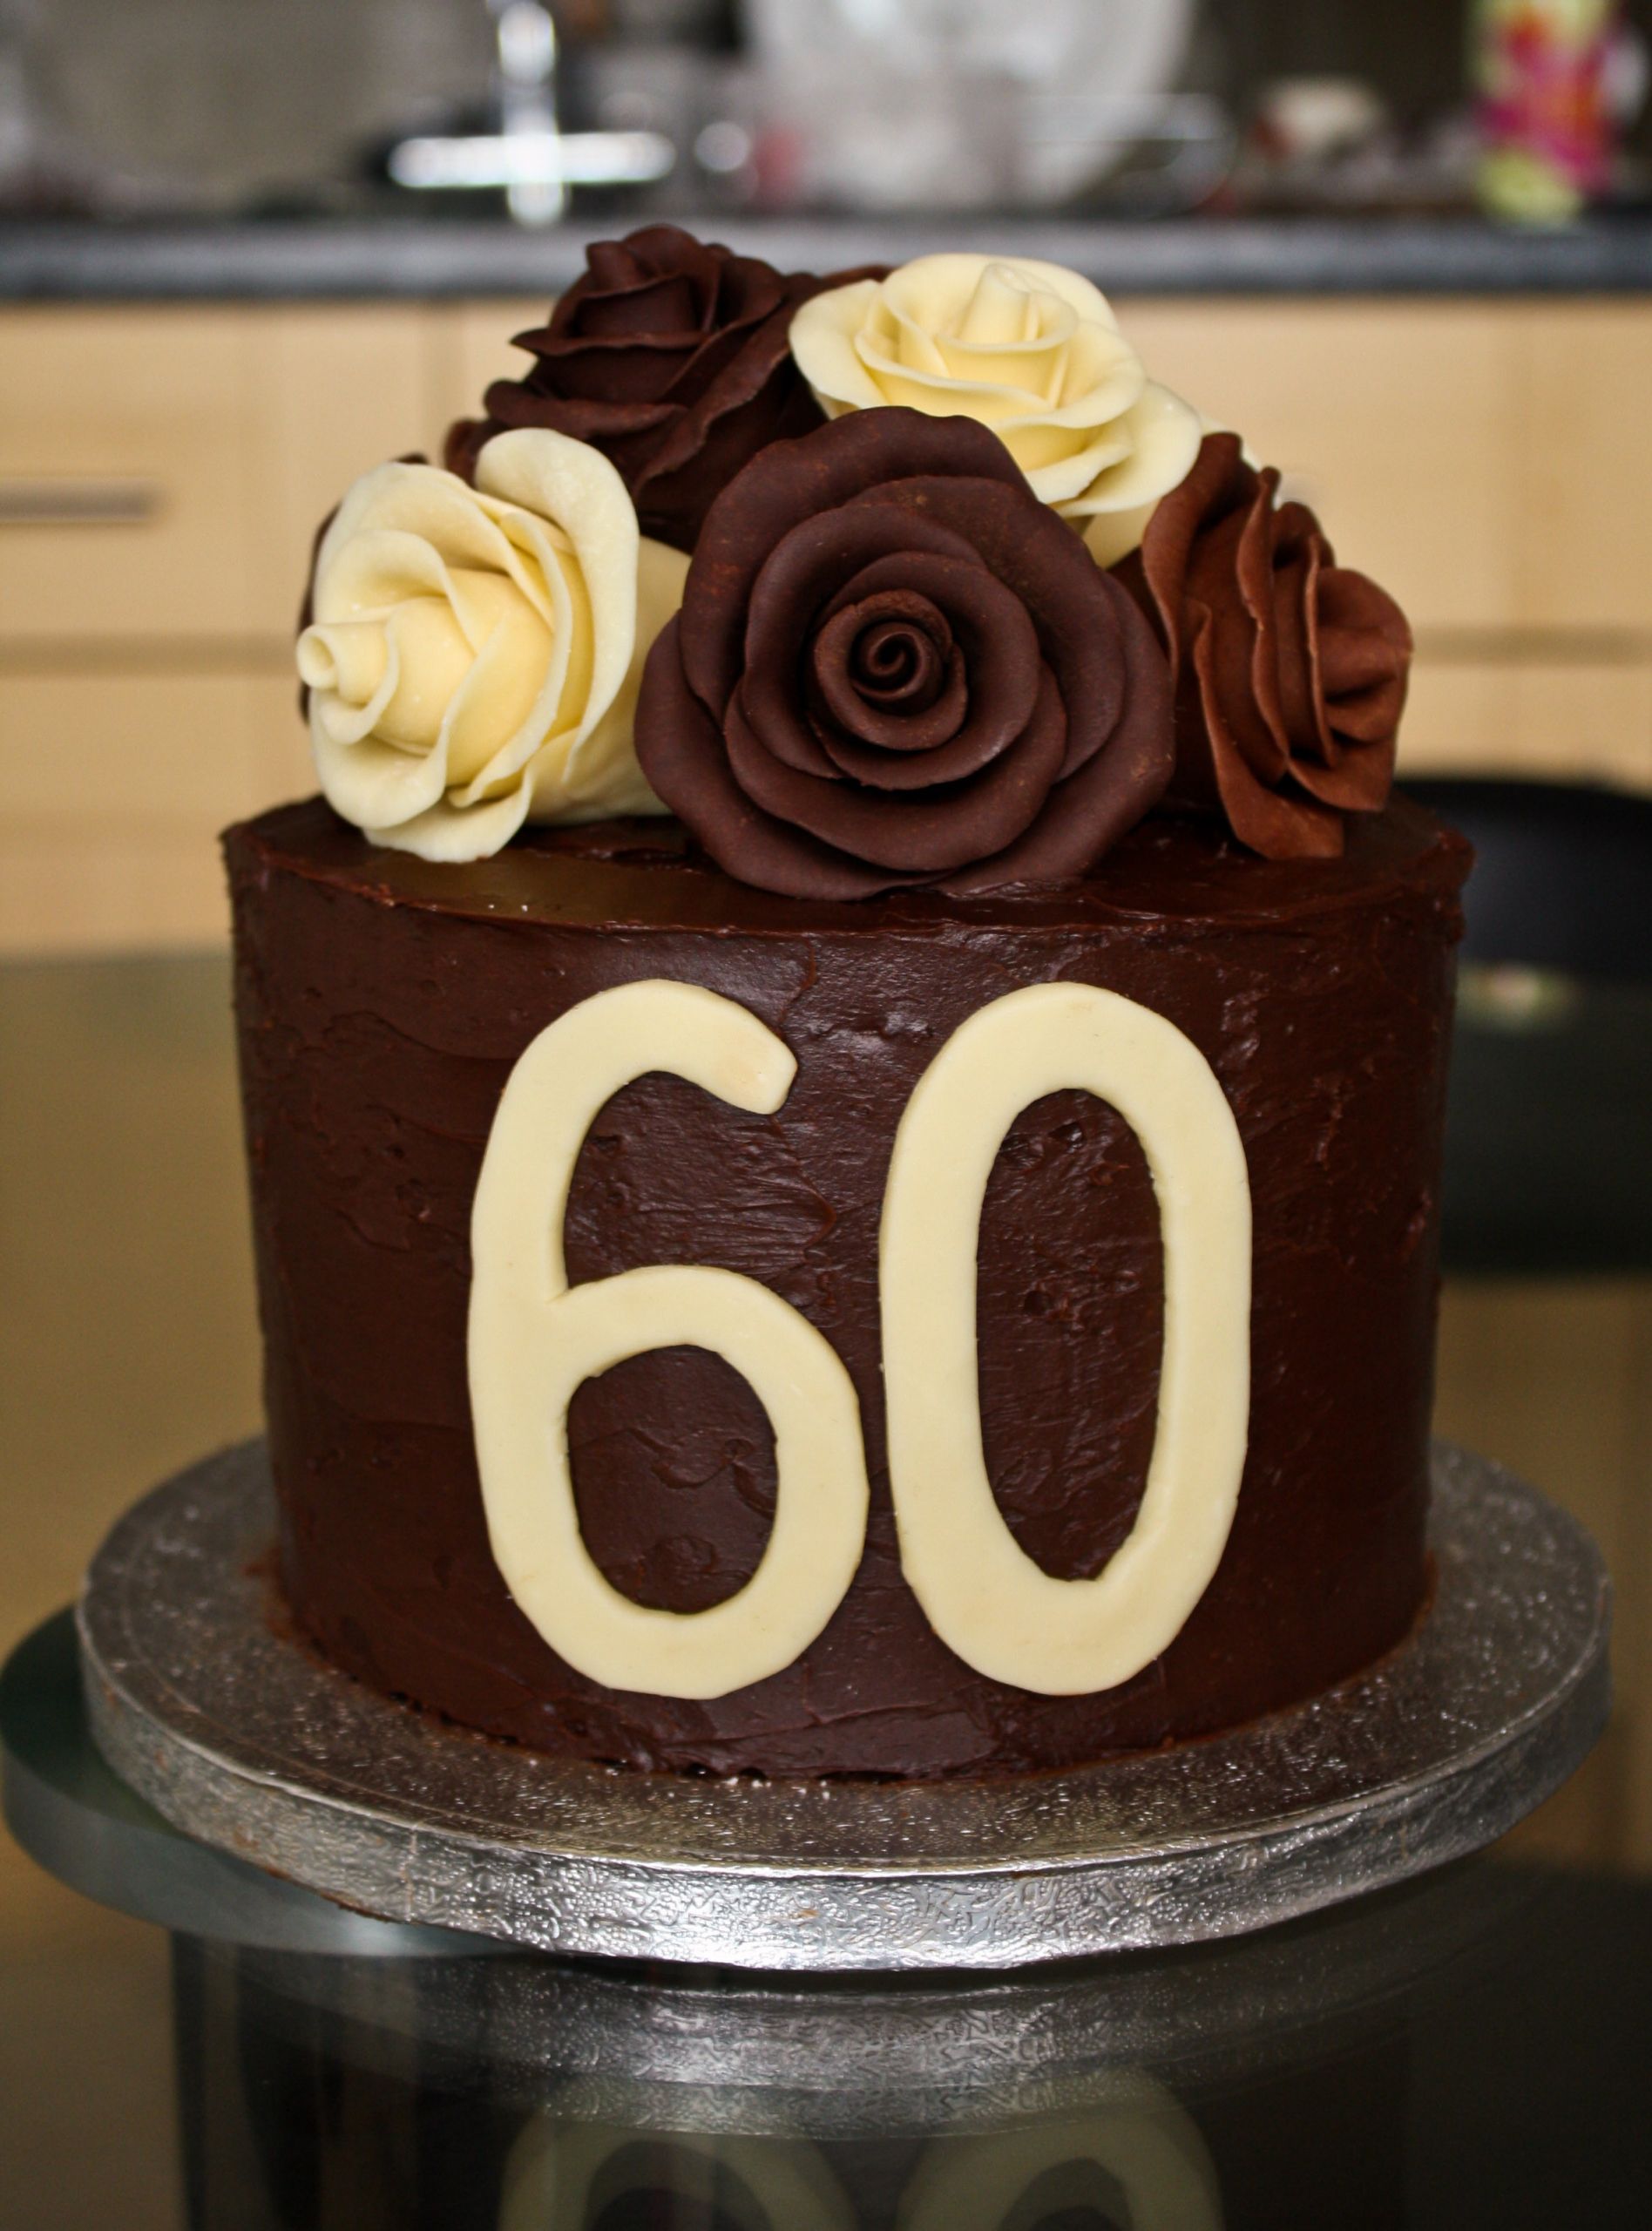 60th Birthday Cake Decorations
 Chocolate Roses Birthday Cake